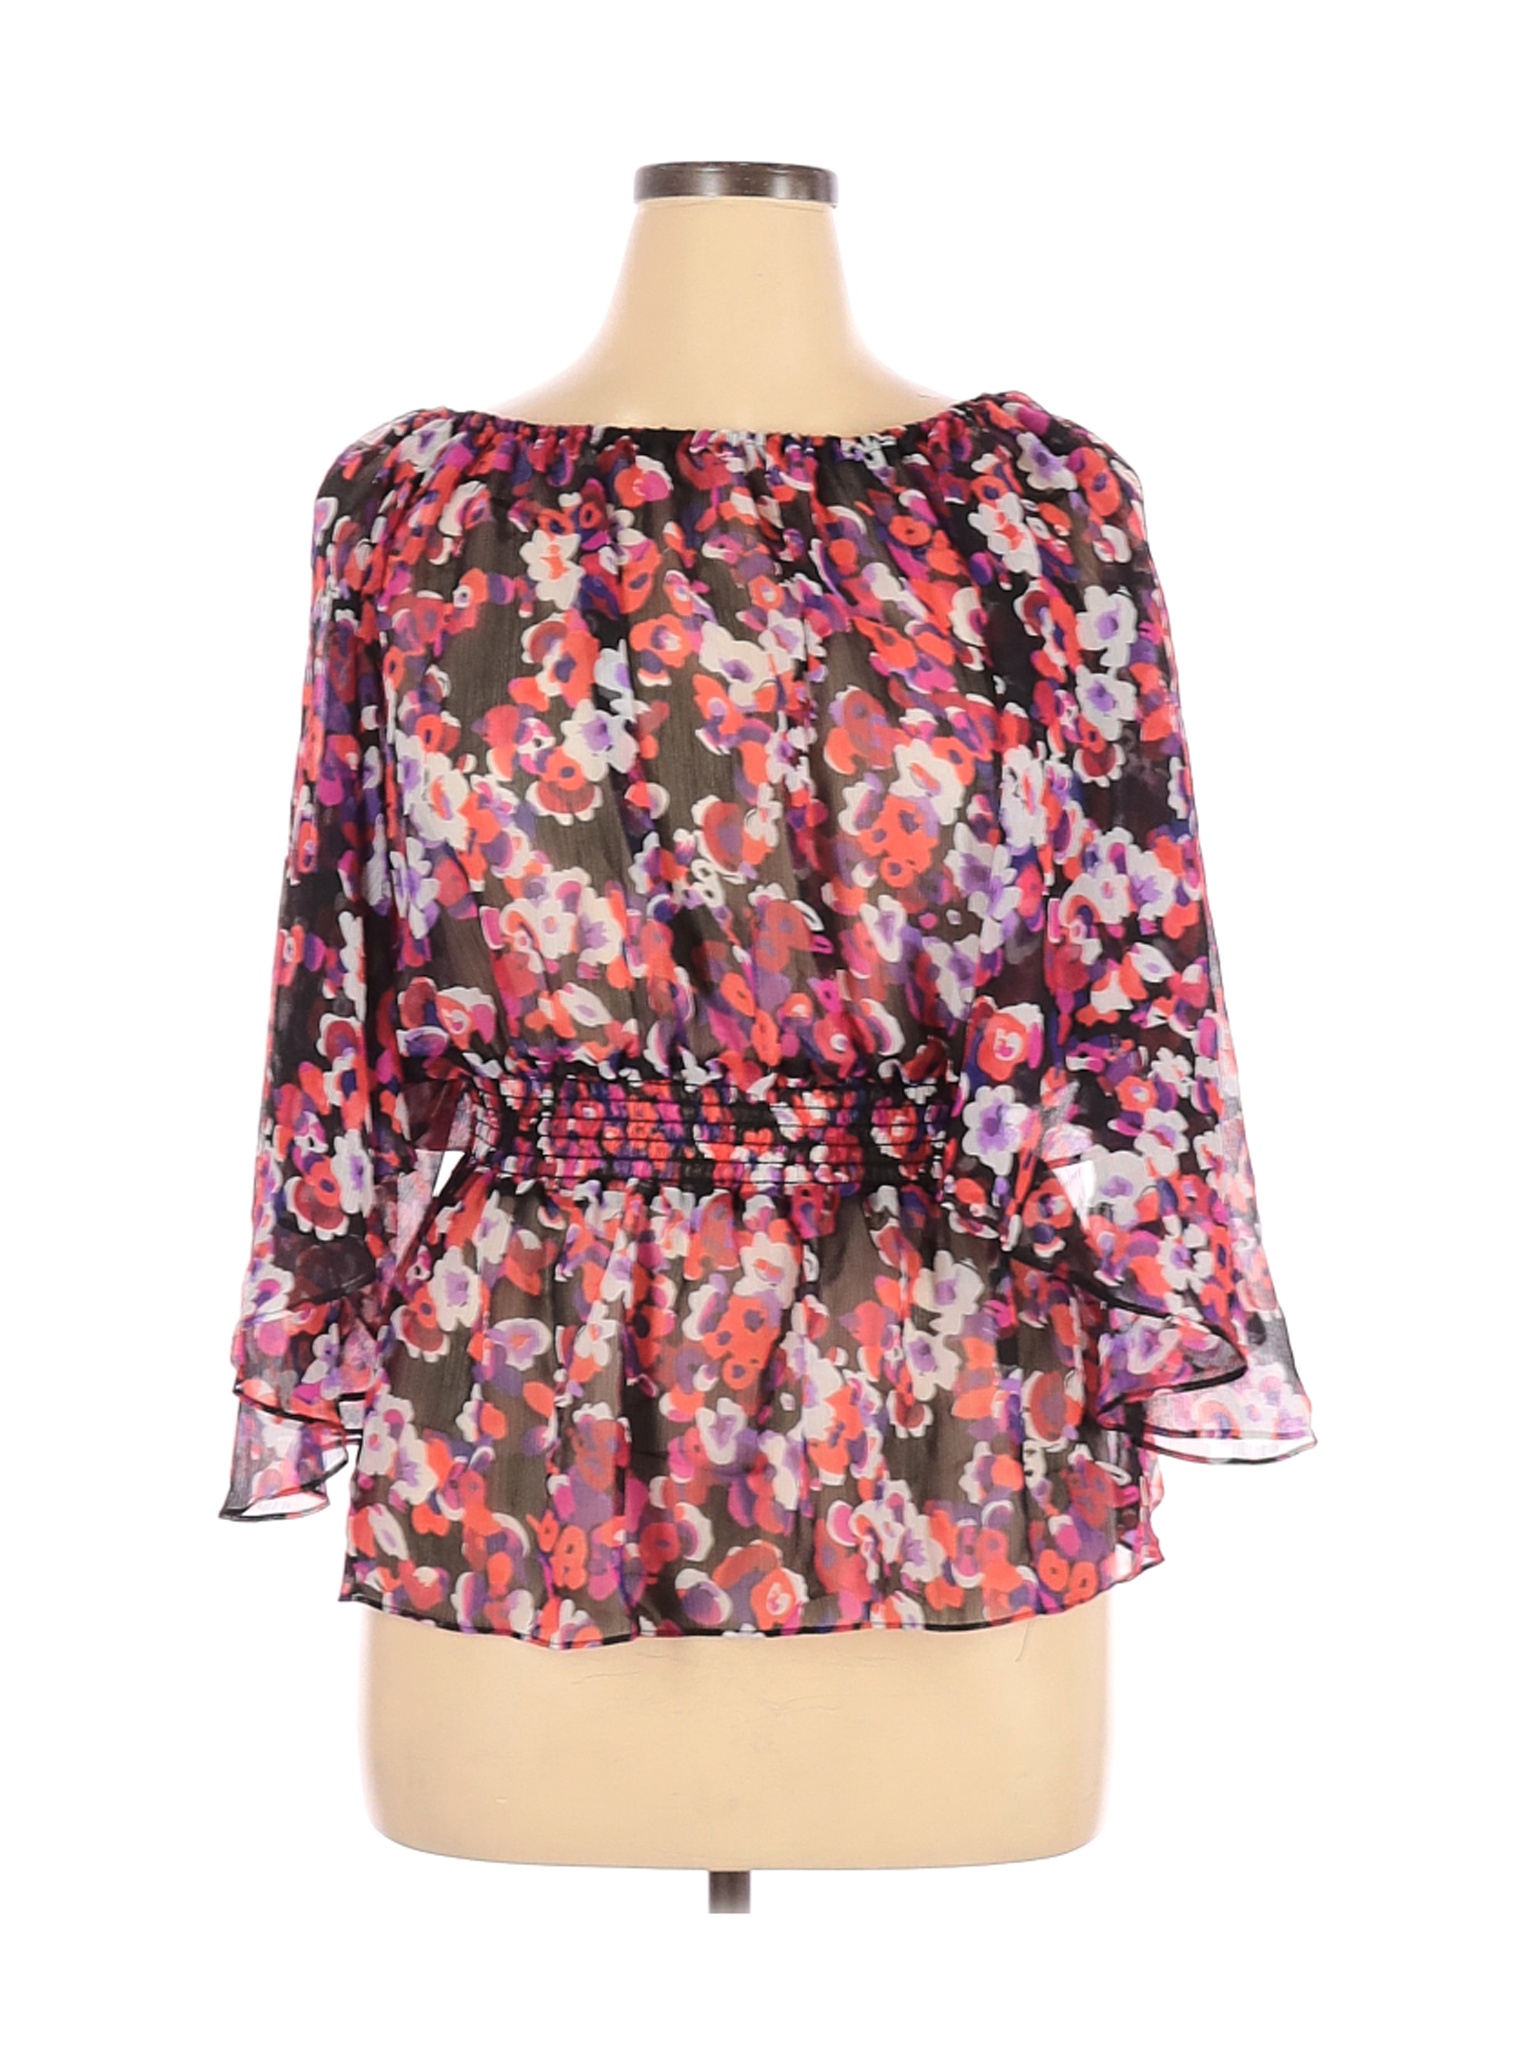 Annalee + Hope Women Black Short Sleeve Blouse XL | eBay